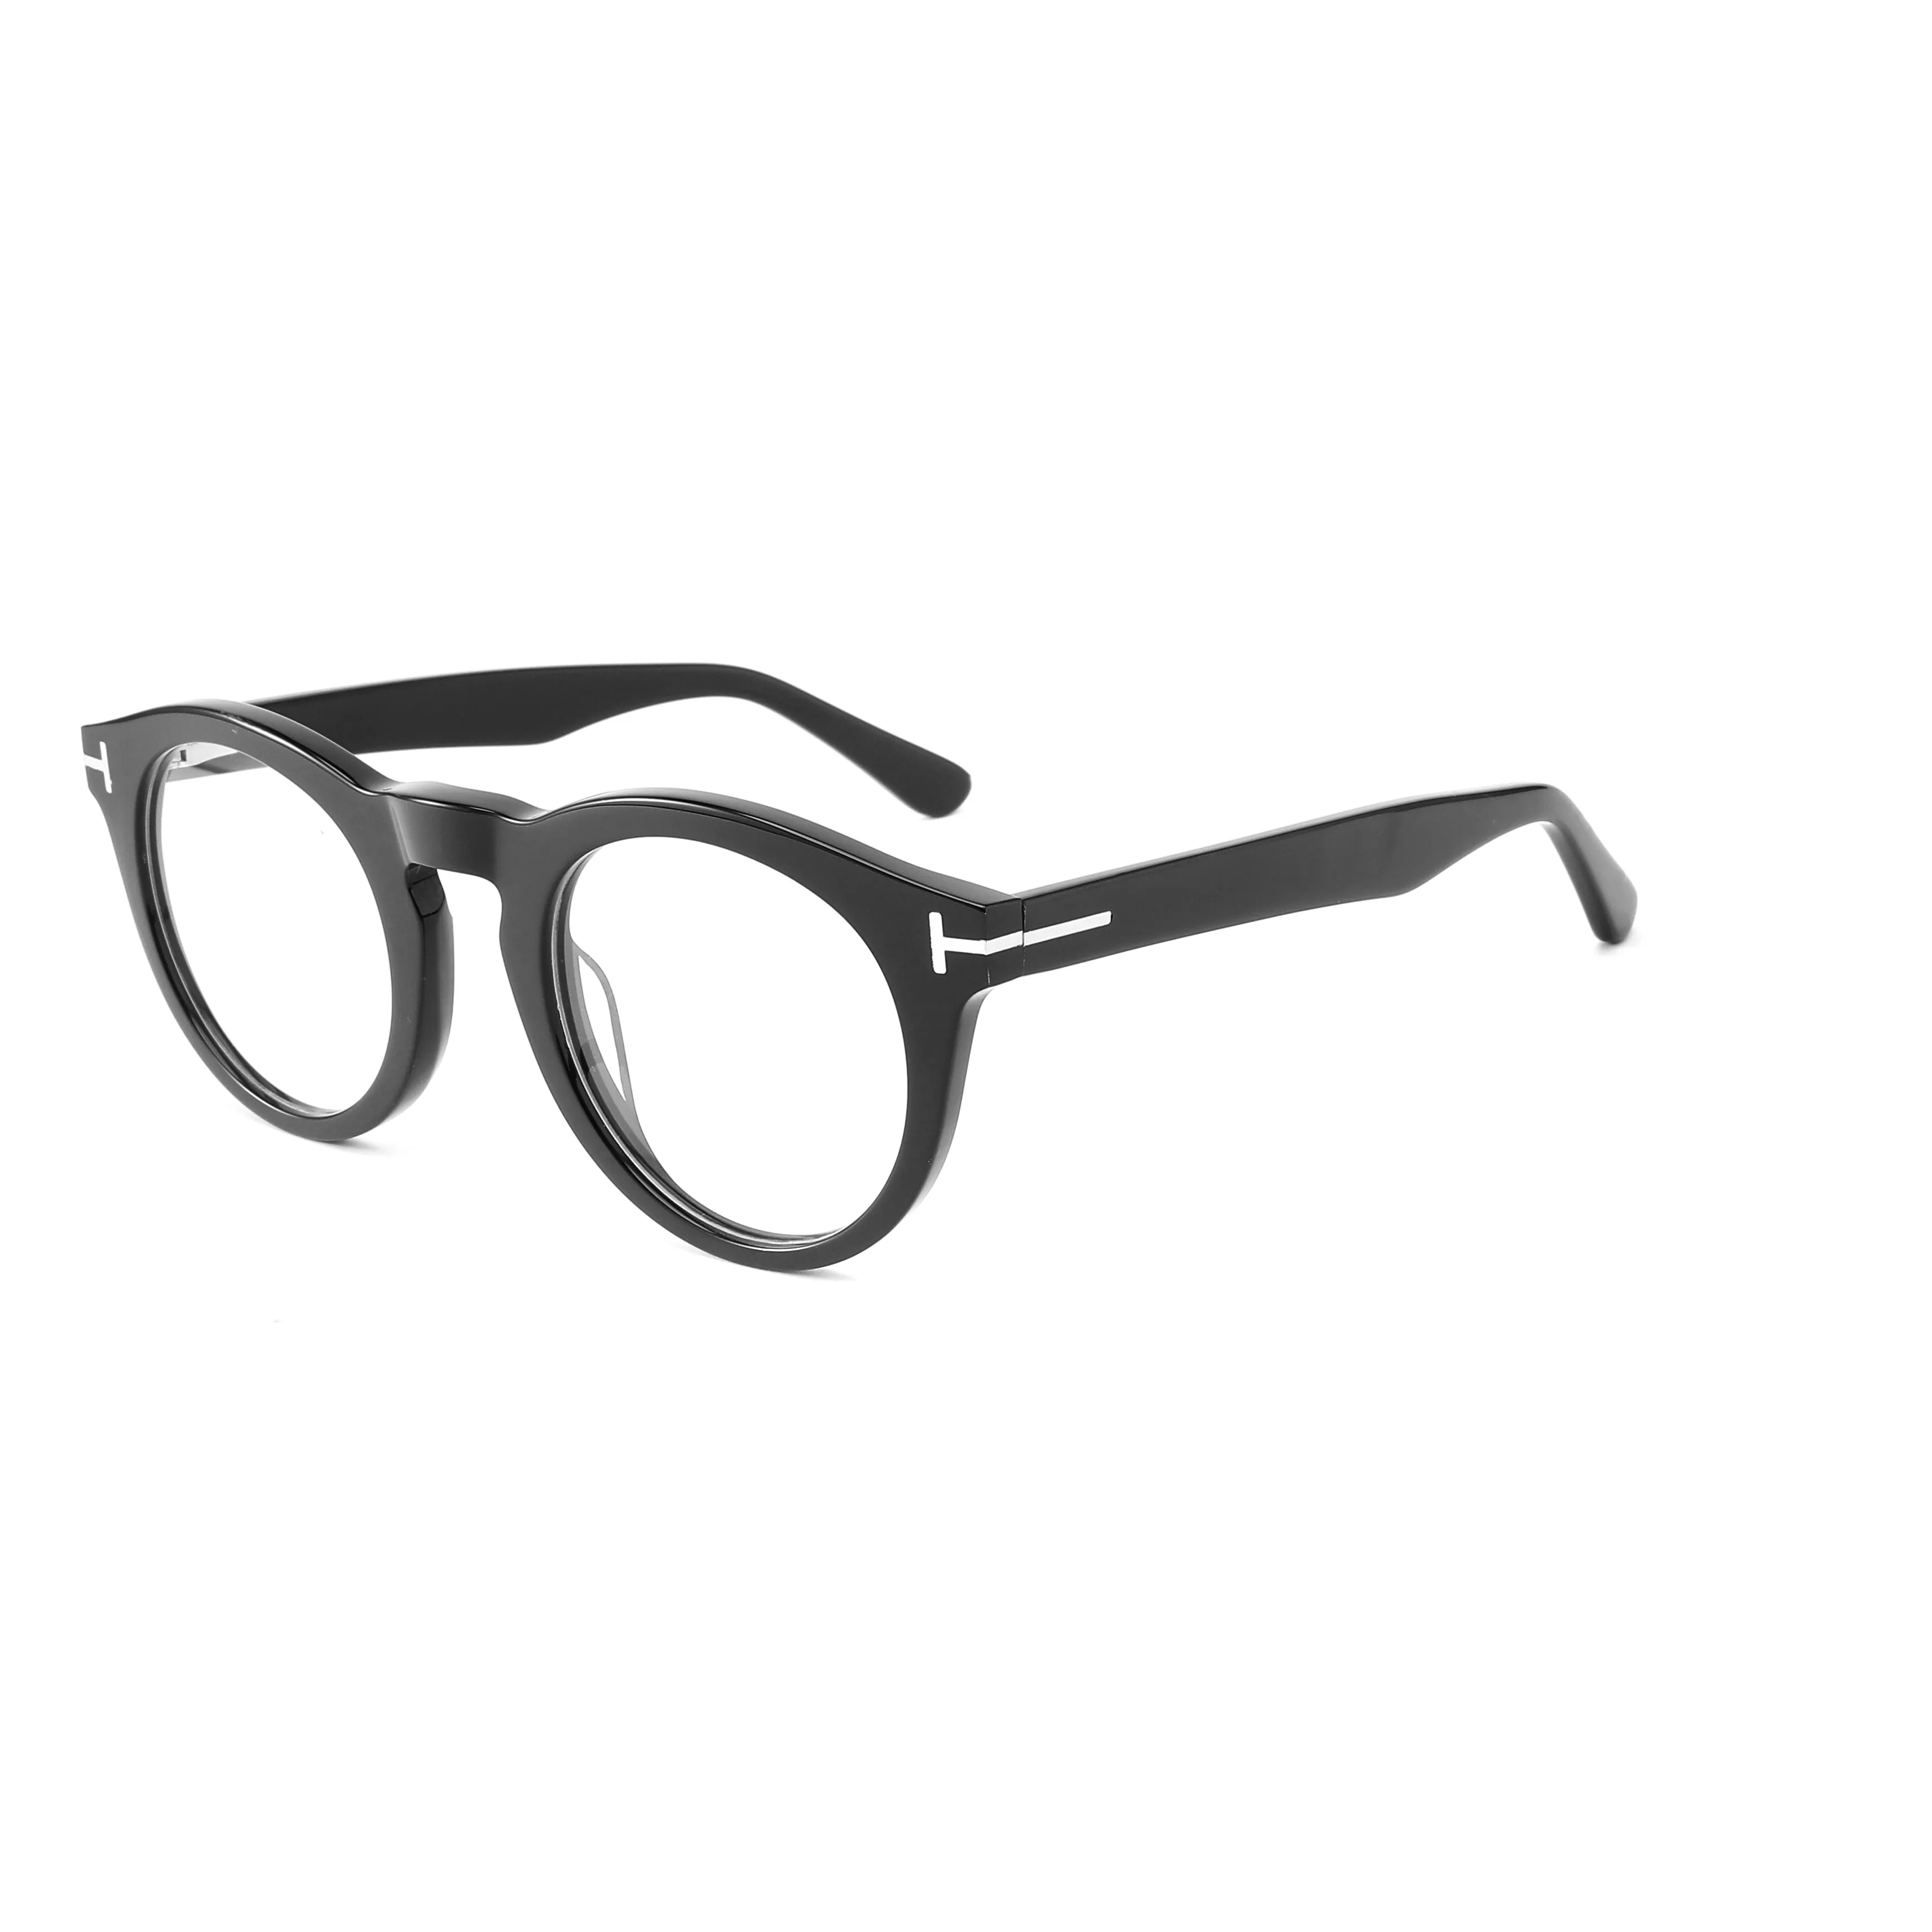 Wholesale TF Tom For Man Optical Eyeglasses Frames Ford Fashion Round Acetate Eyewear Women Sunglasses Prescription Glasses